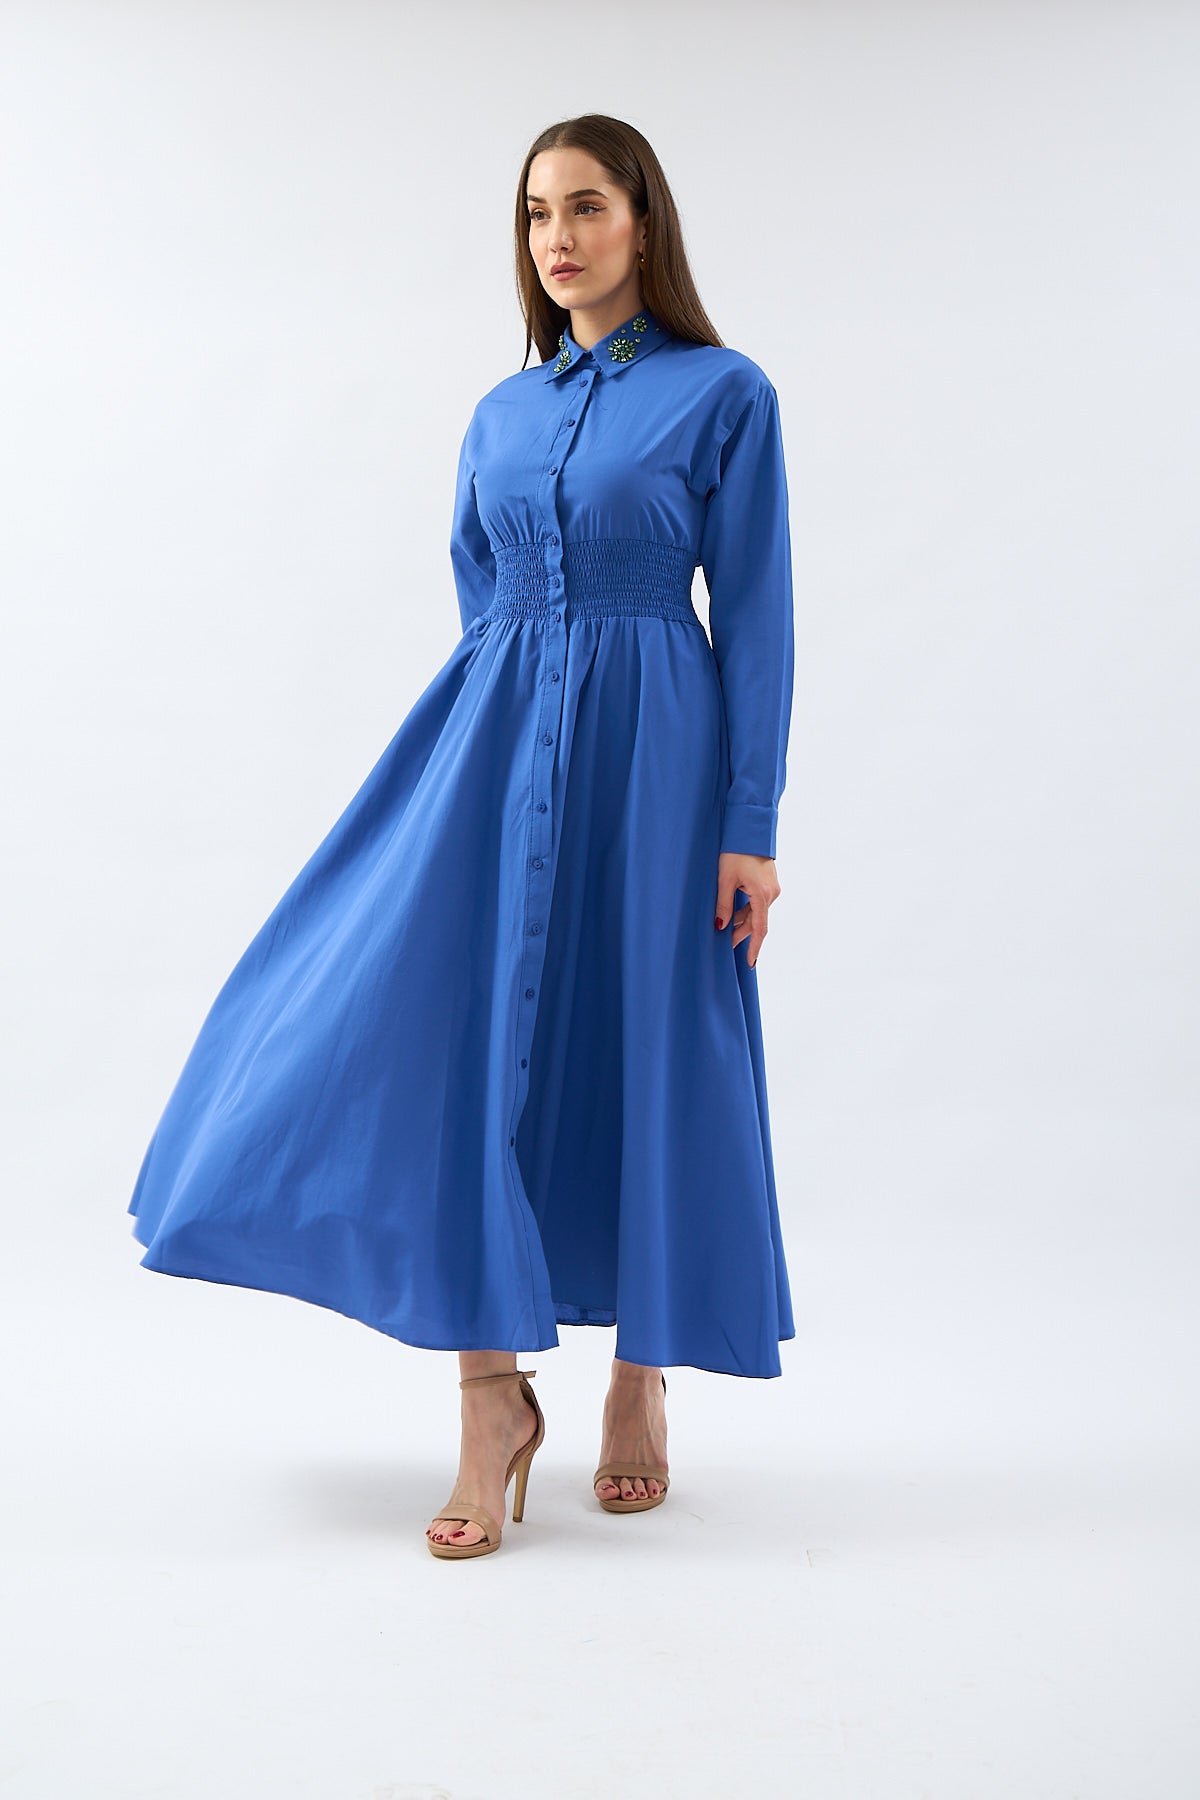 Dark Blue dress with stones on collar - Lebbse